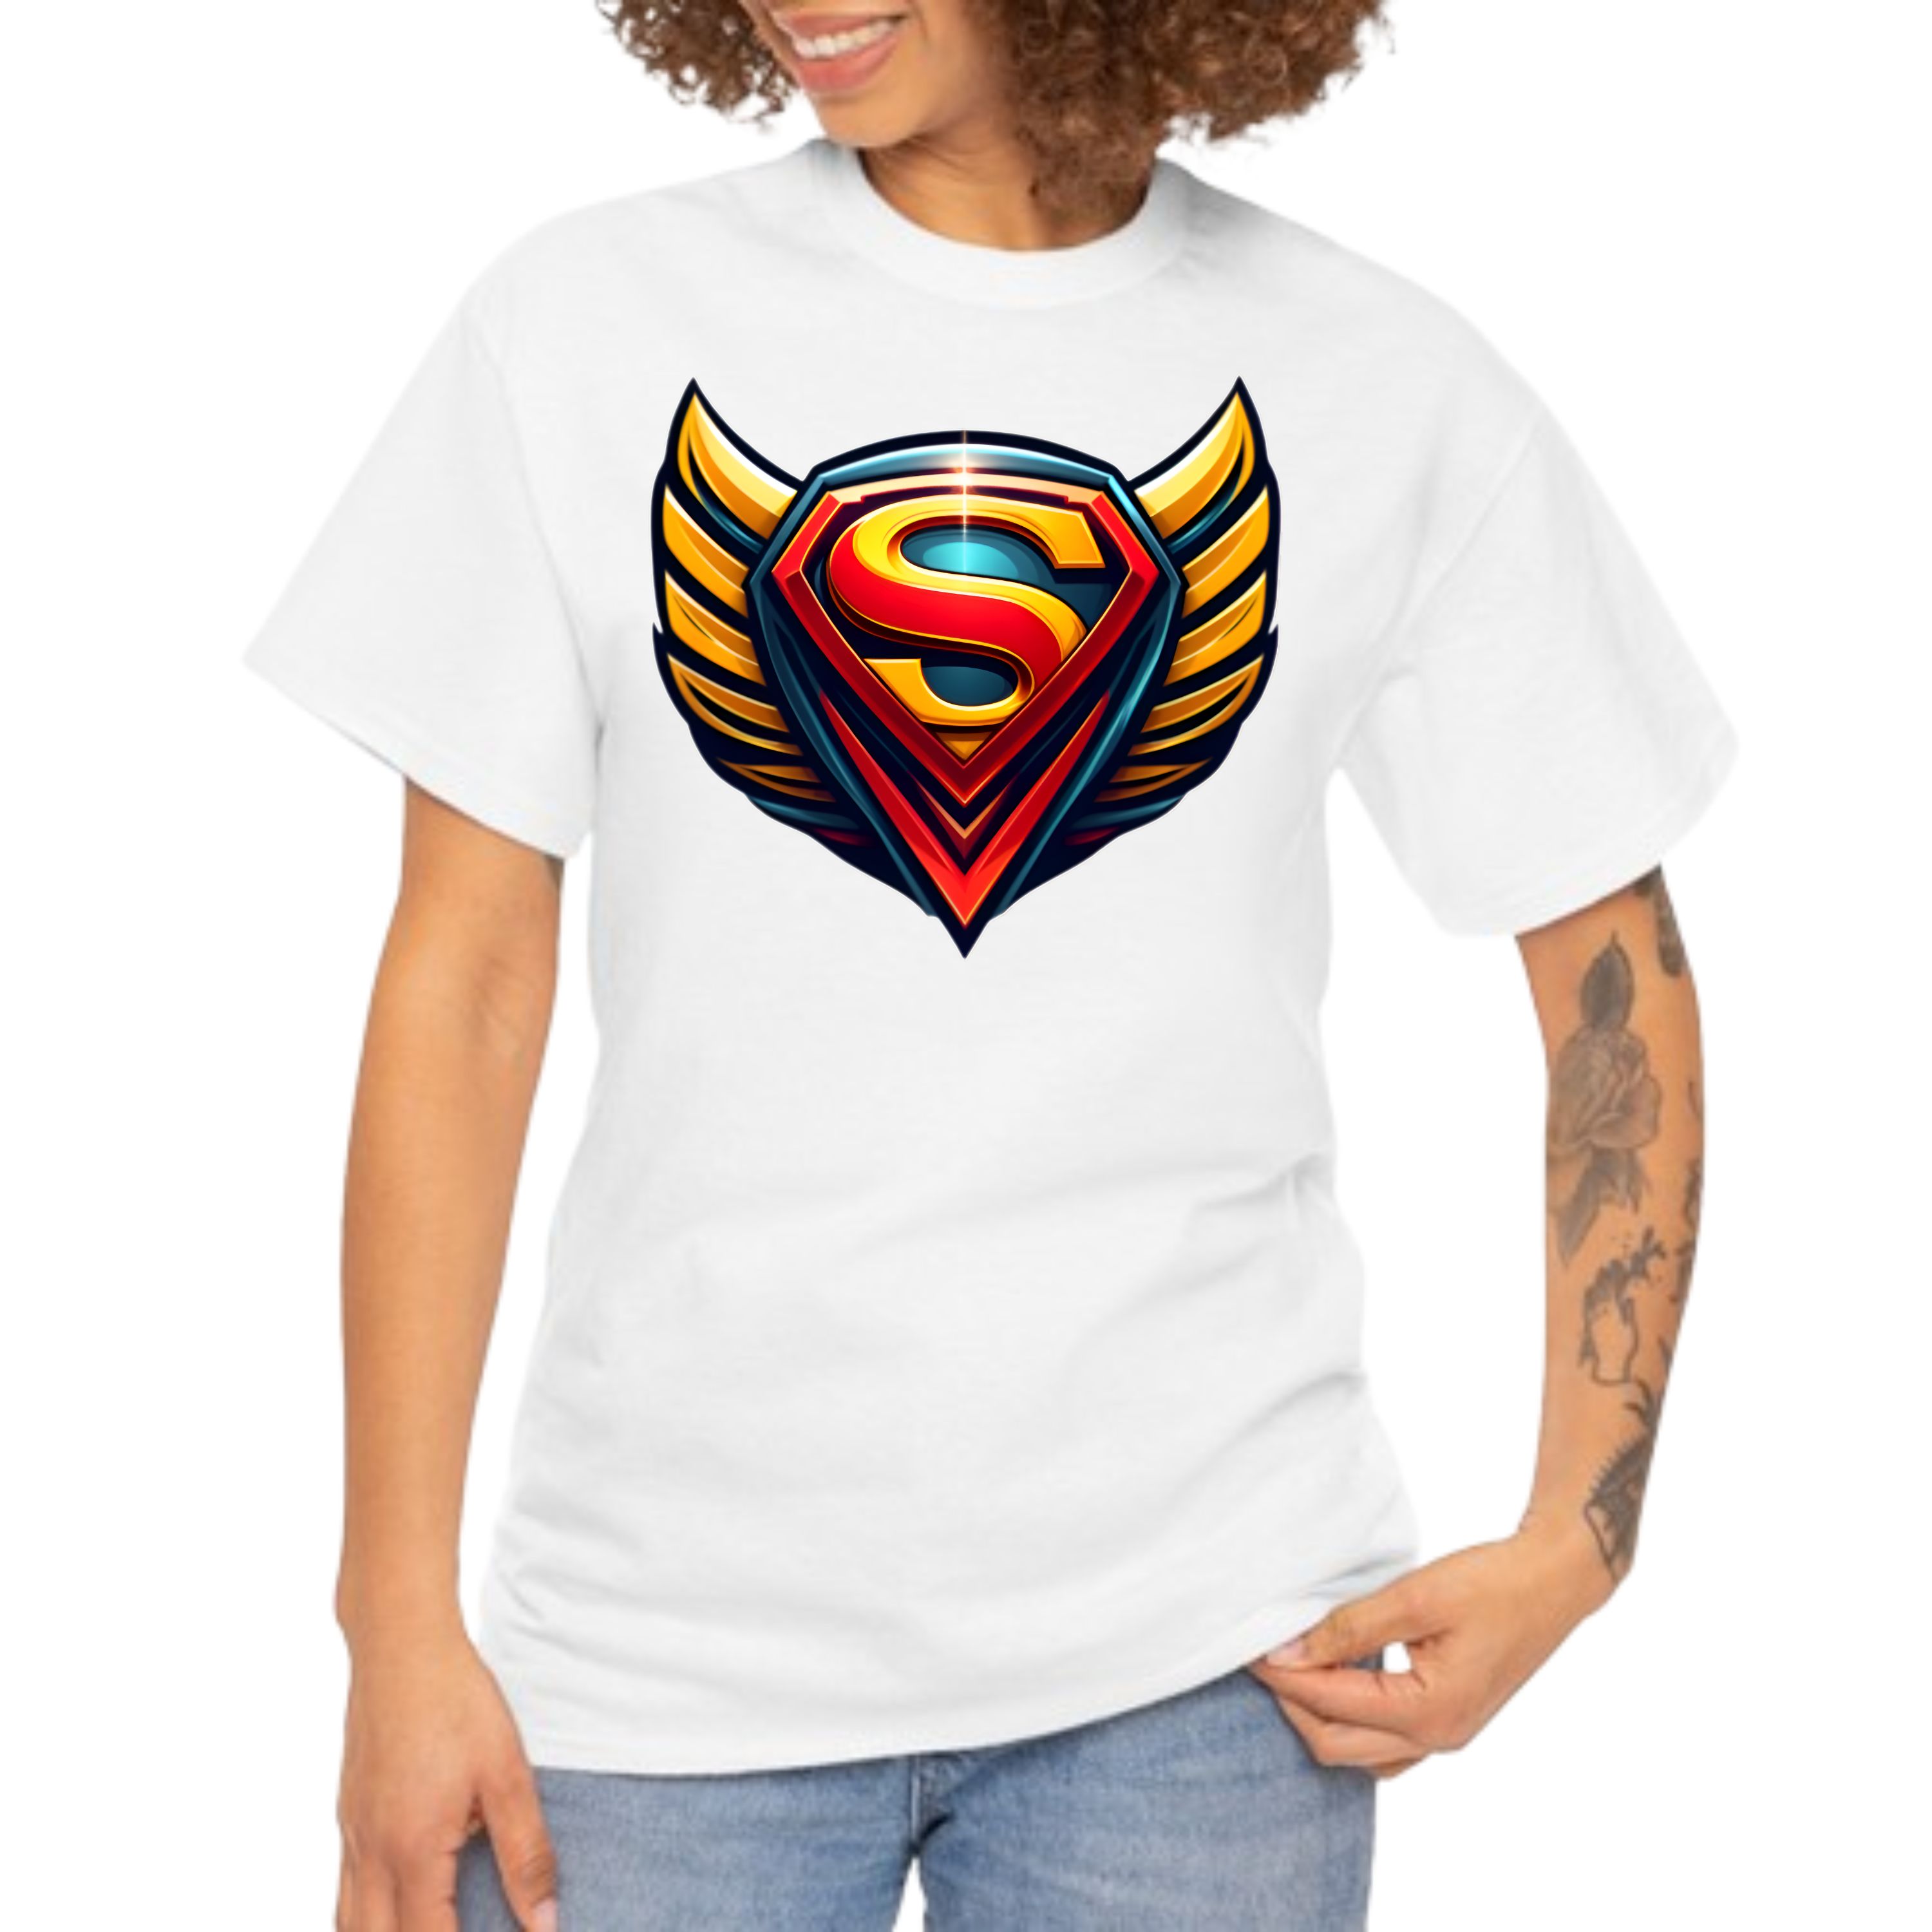 superhero T-shirt preview image.